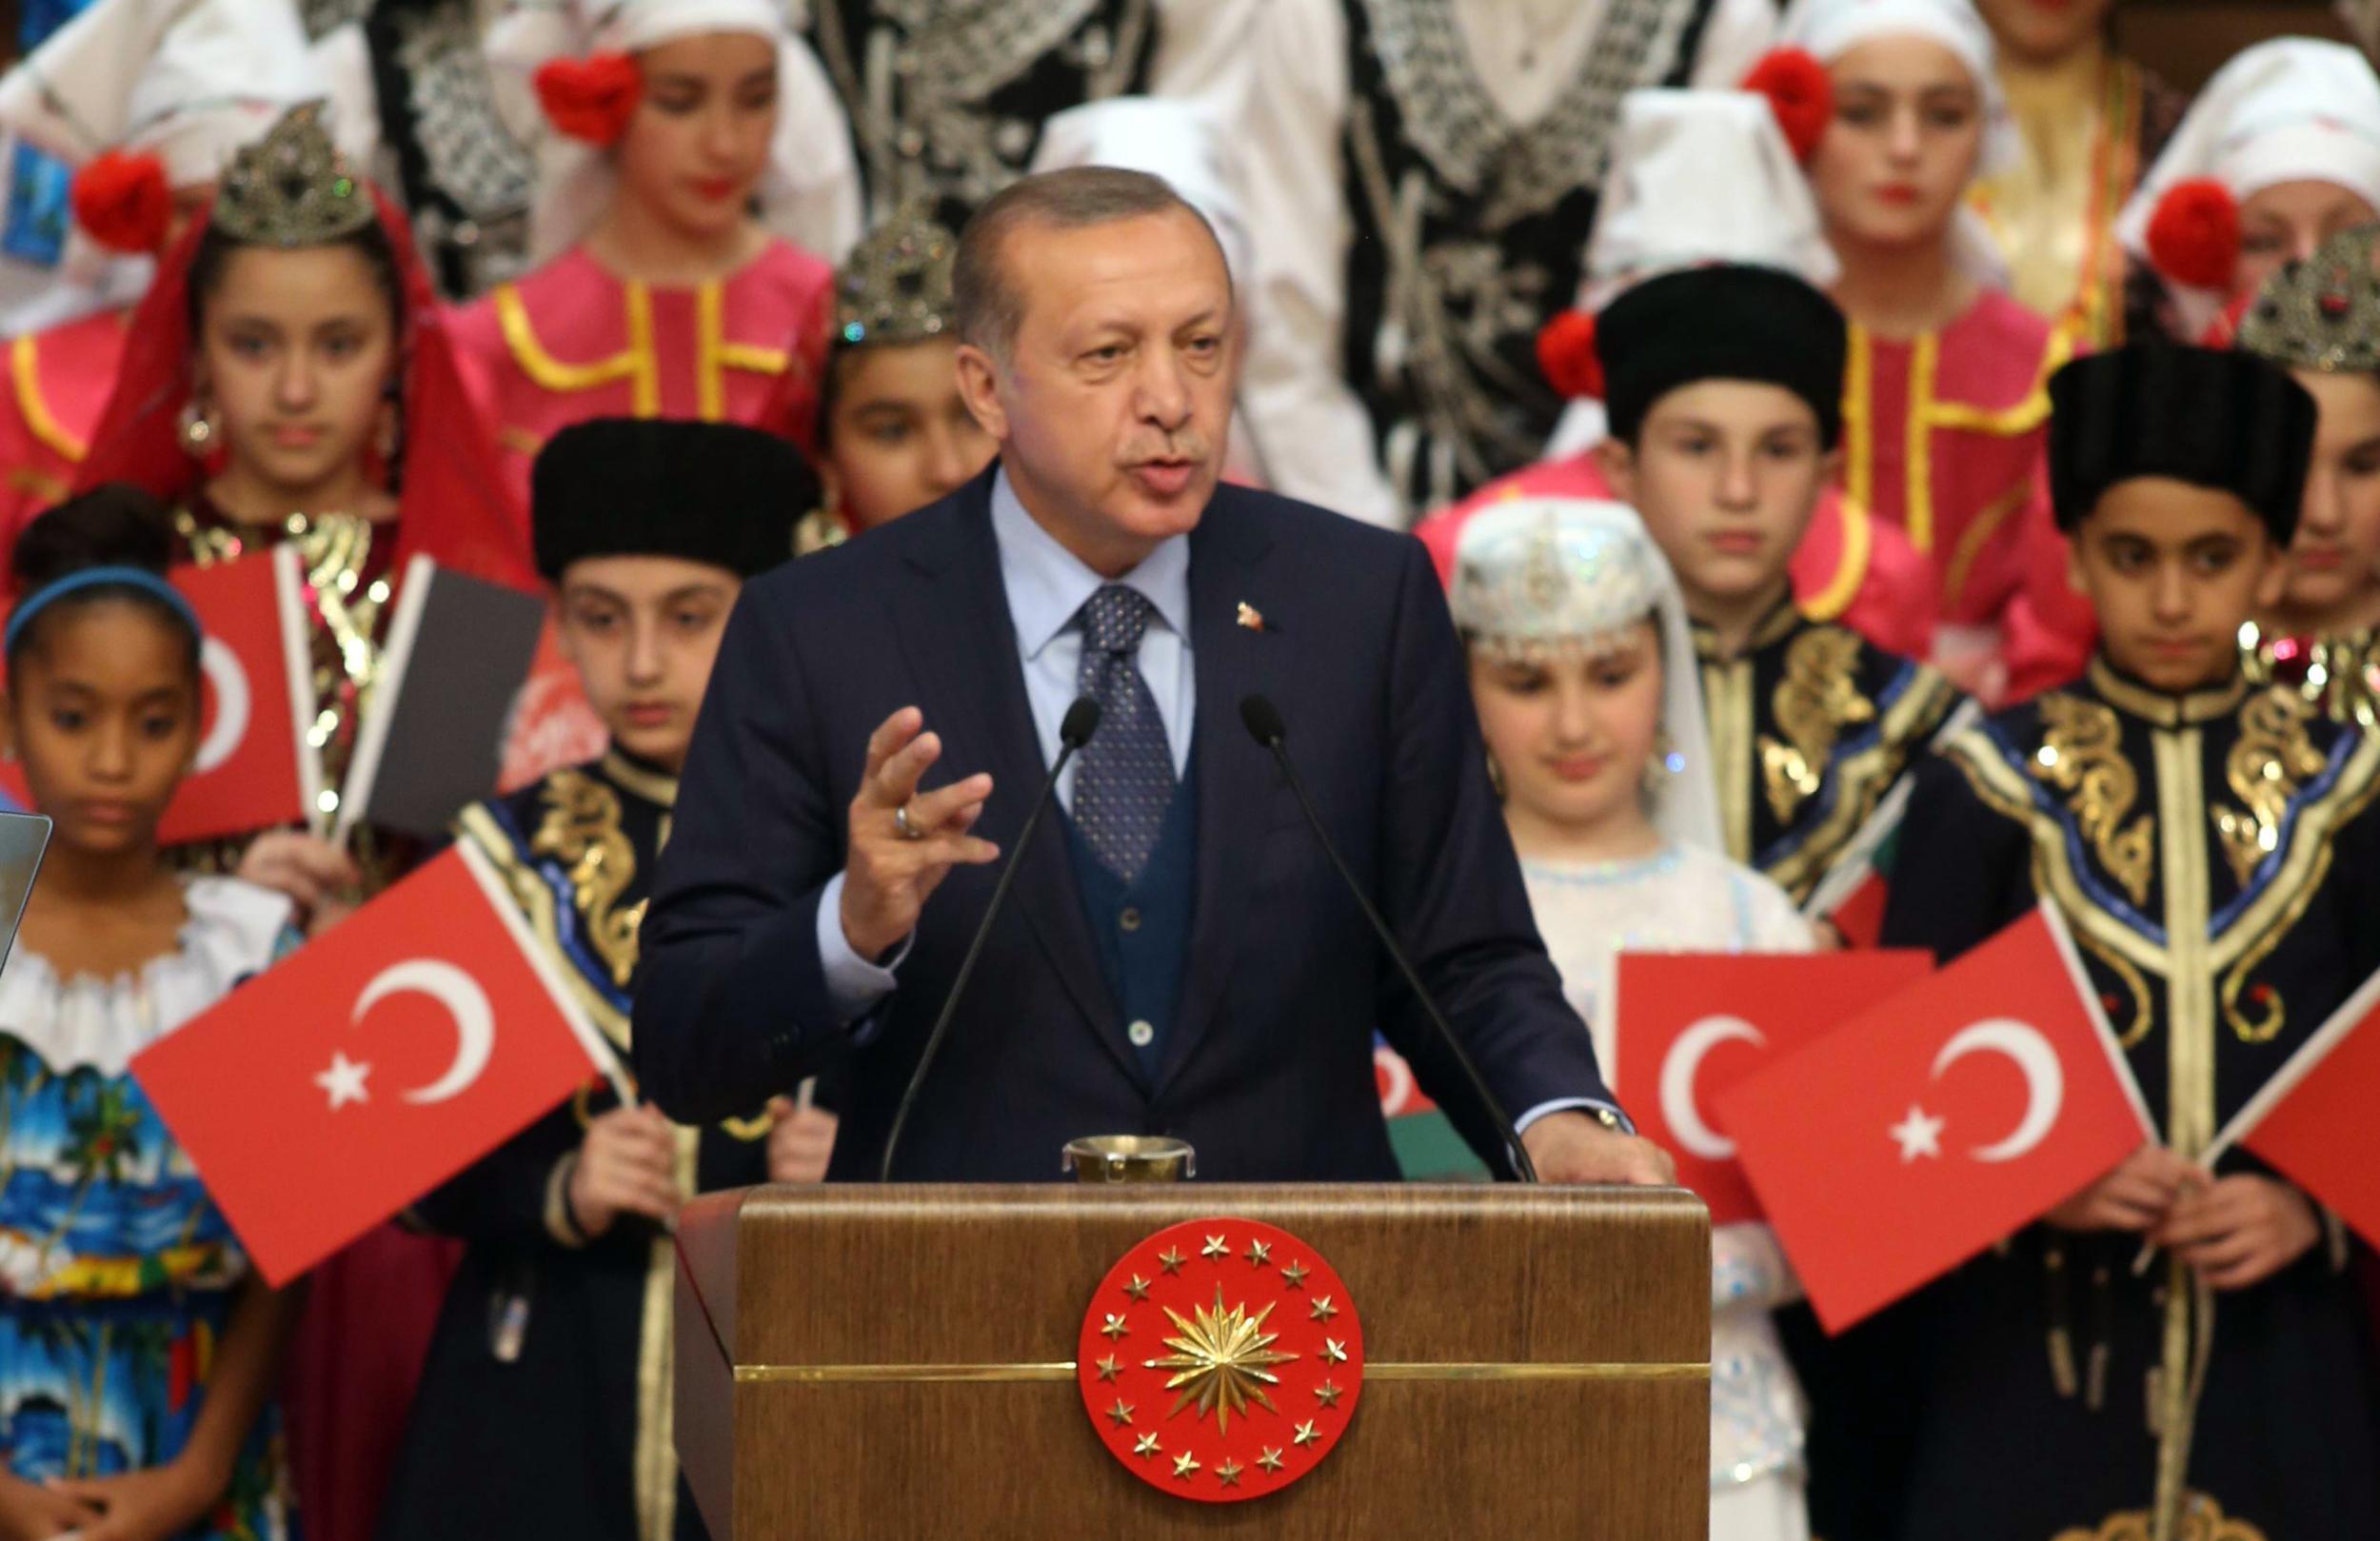 Turkish President Recep Tayyip Erdogan is set to meet Donald Trump in May